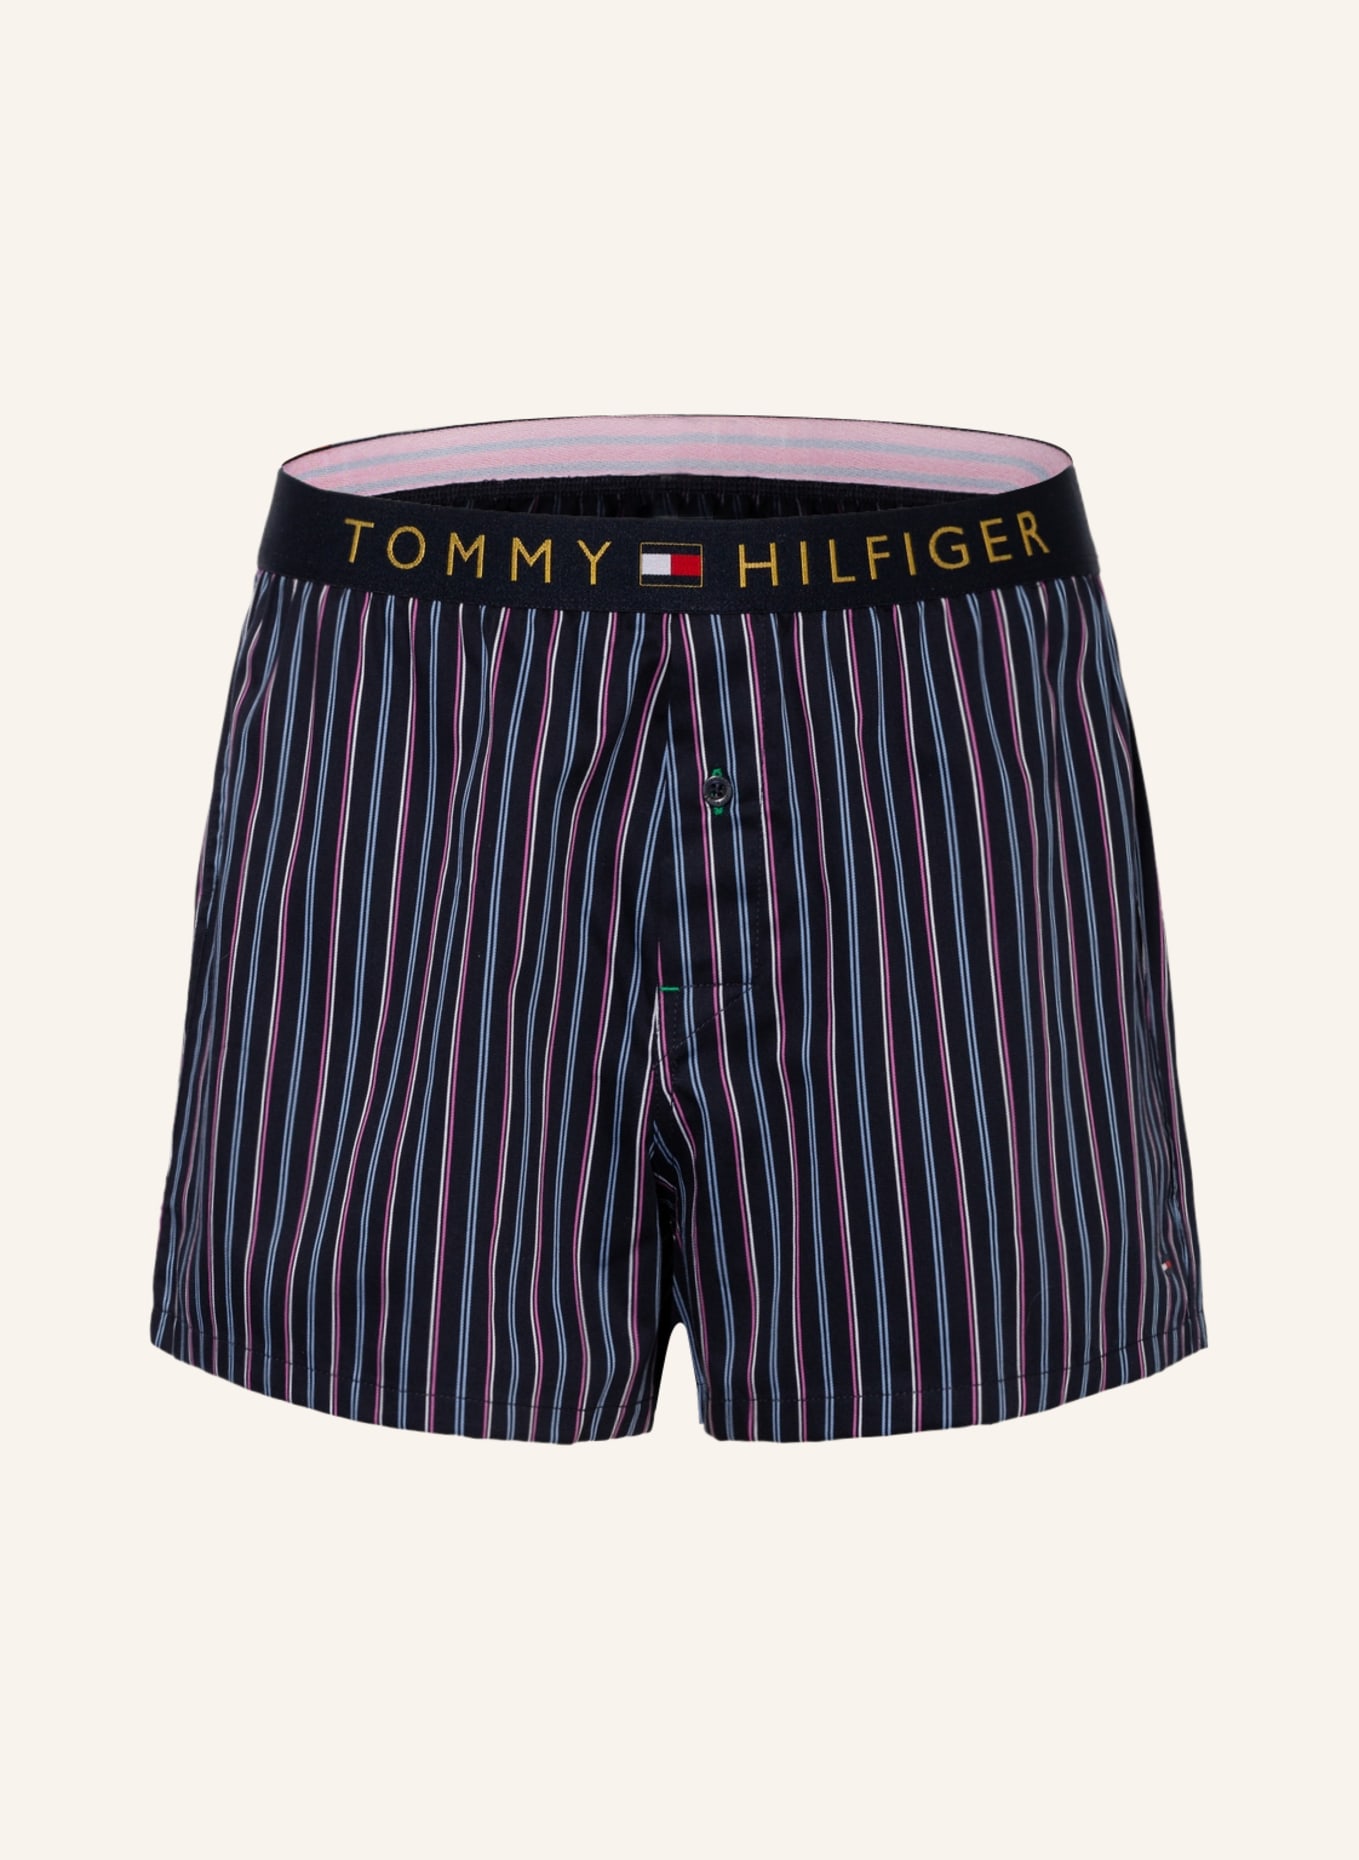 TOMMY HILFIGER Web-Boxershorts, Farbe: DUNKELBLAU (Bild 1)